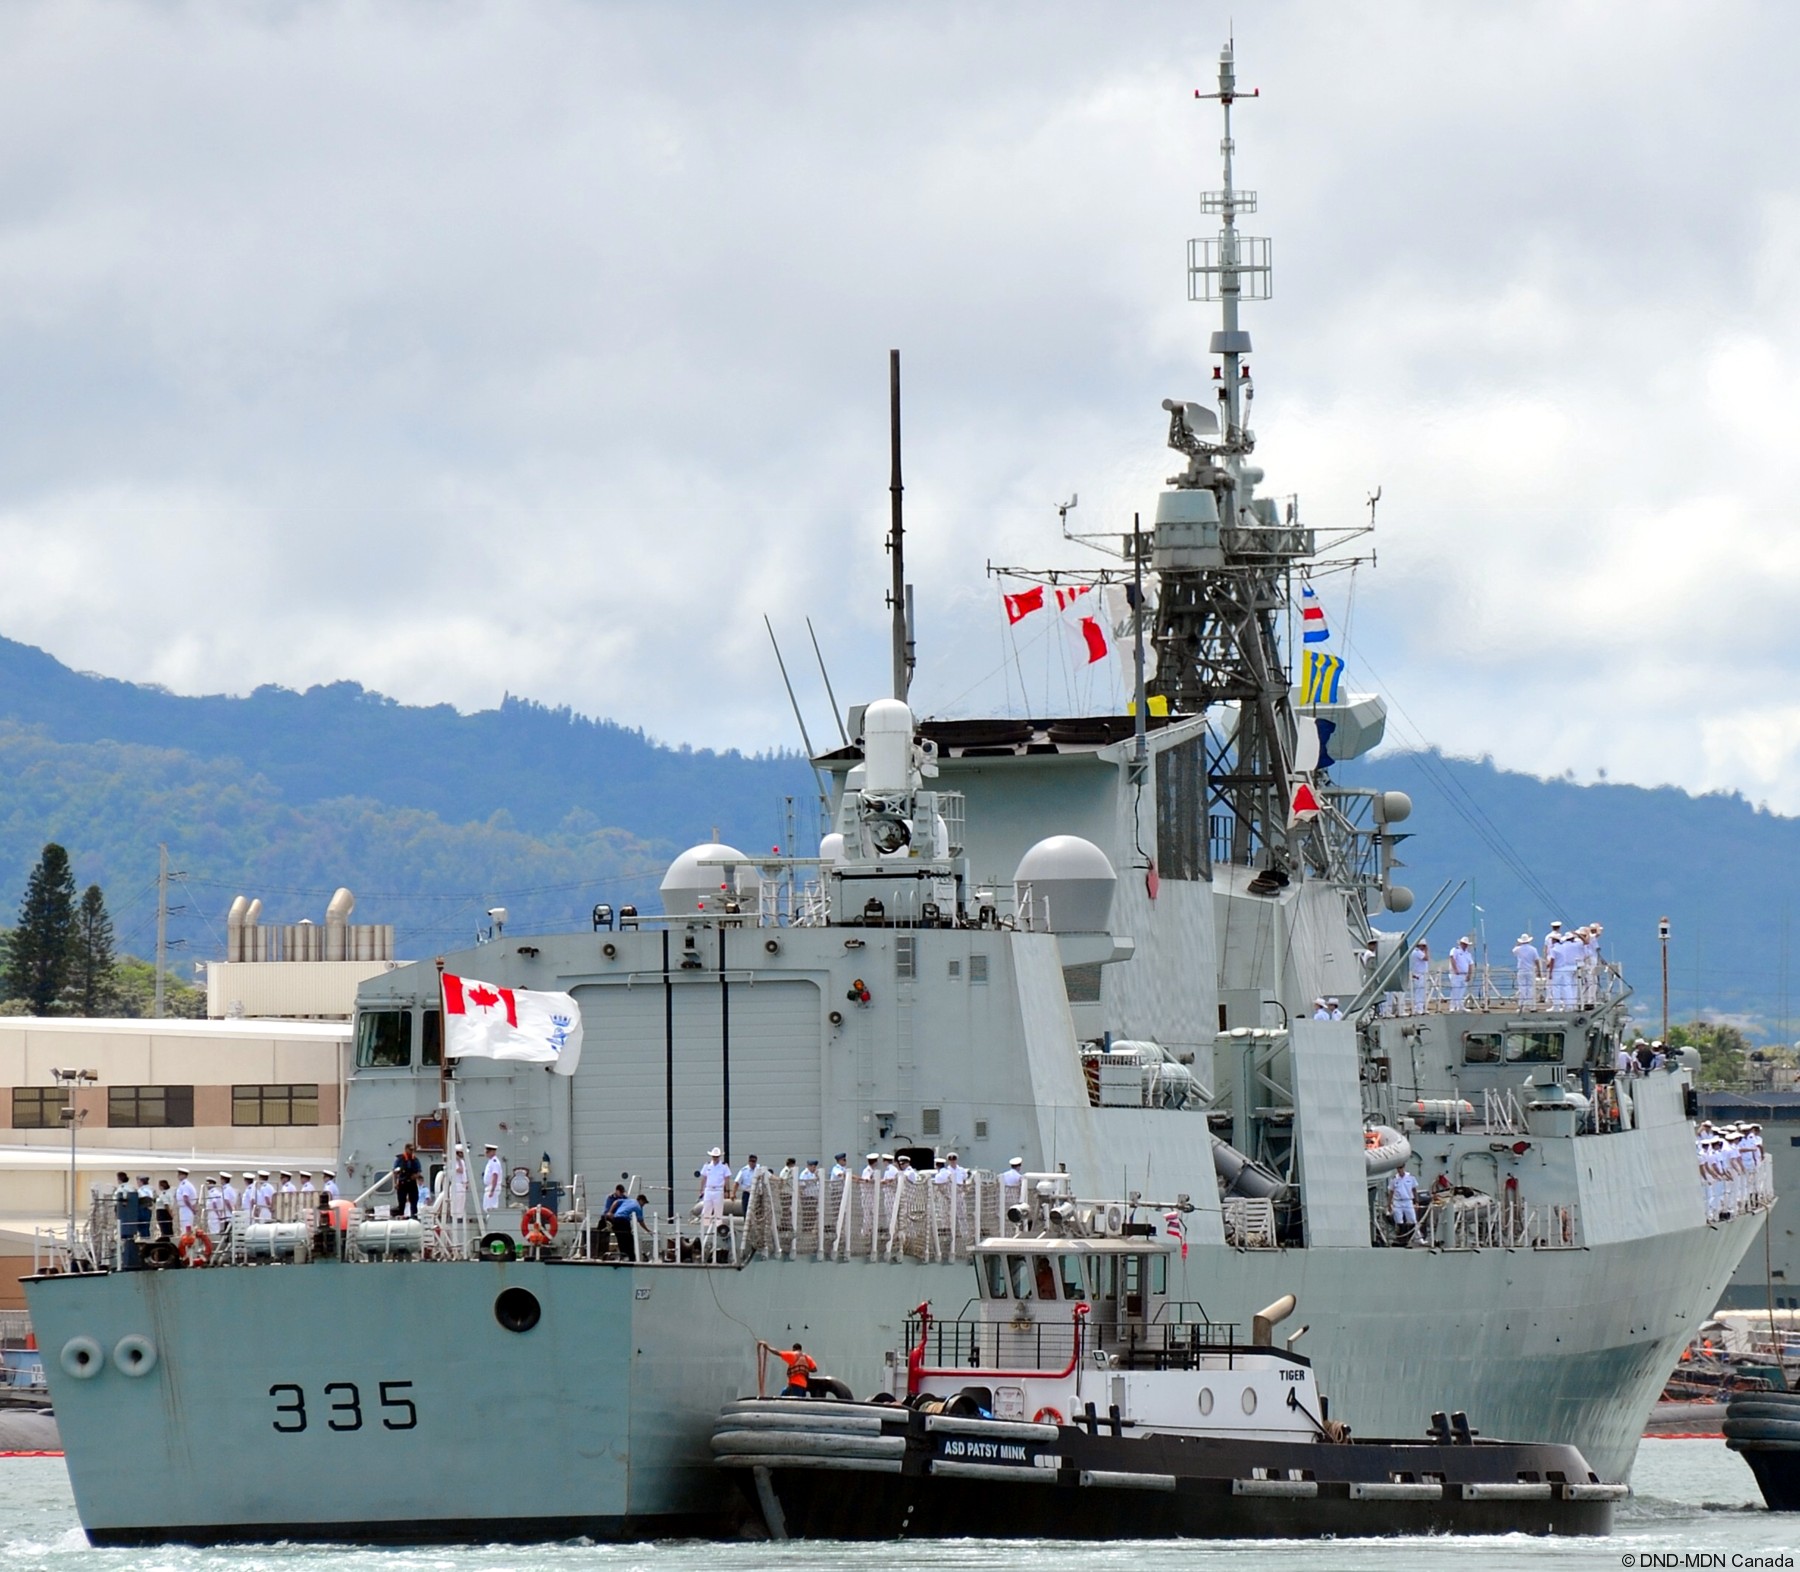 ffh-335 hmcs calgary halifax class helicopter patrol frigate ncsm royal canadian navy 71